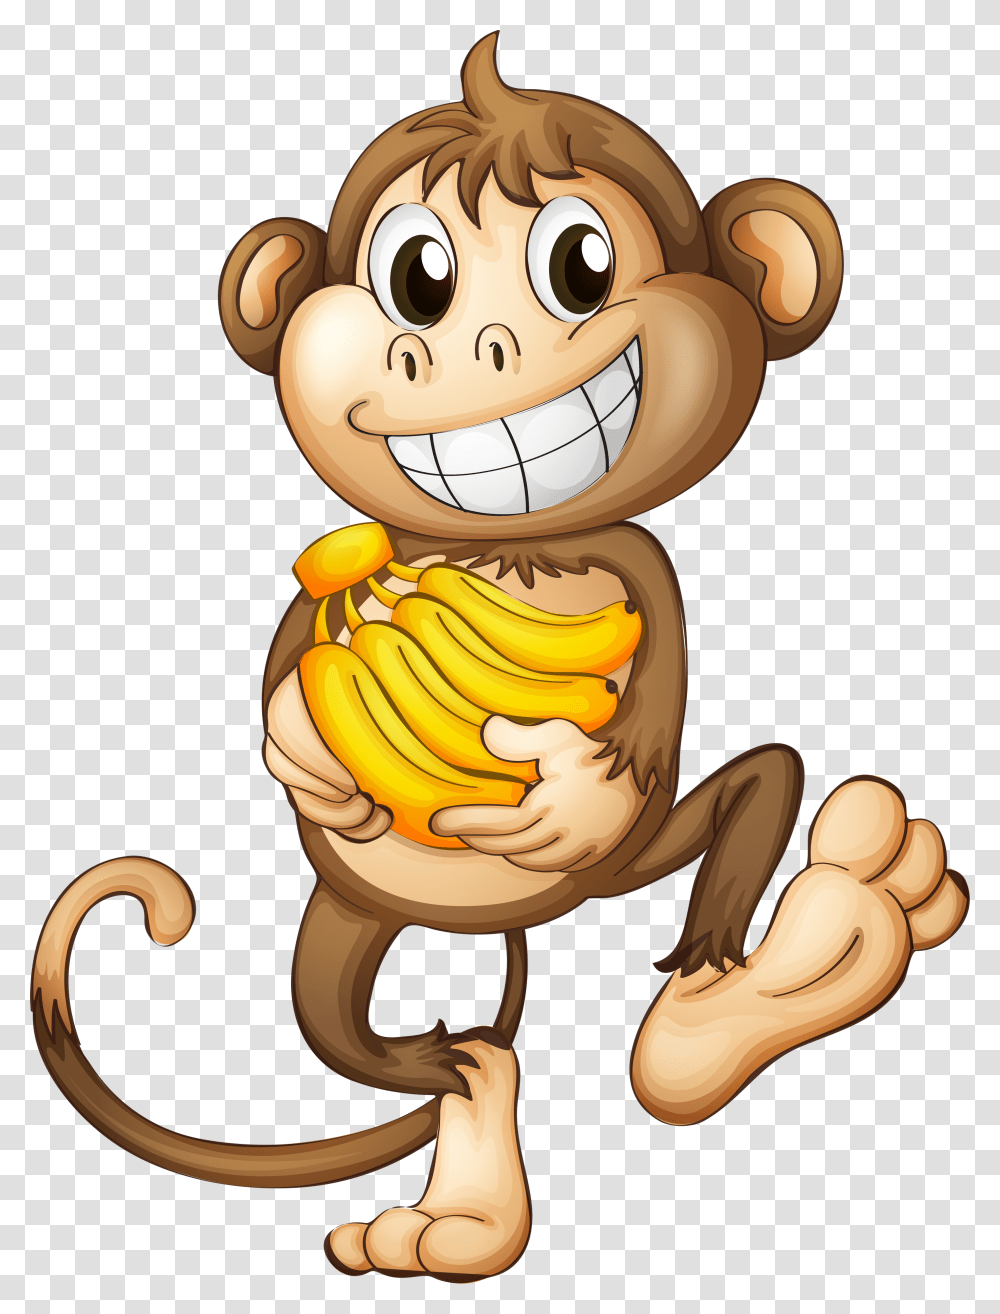 Monkey Banana Clip Art Cartoon Monkey With Banana, Plant, Food, Vegetable, Seed Transparent Png